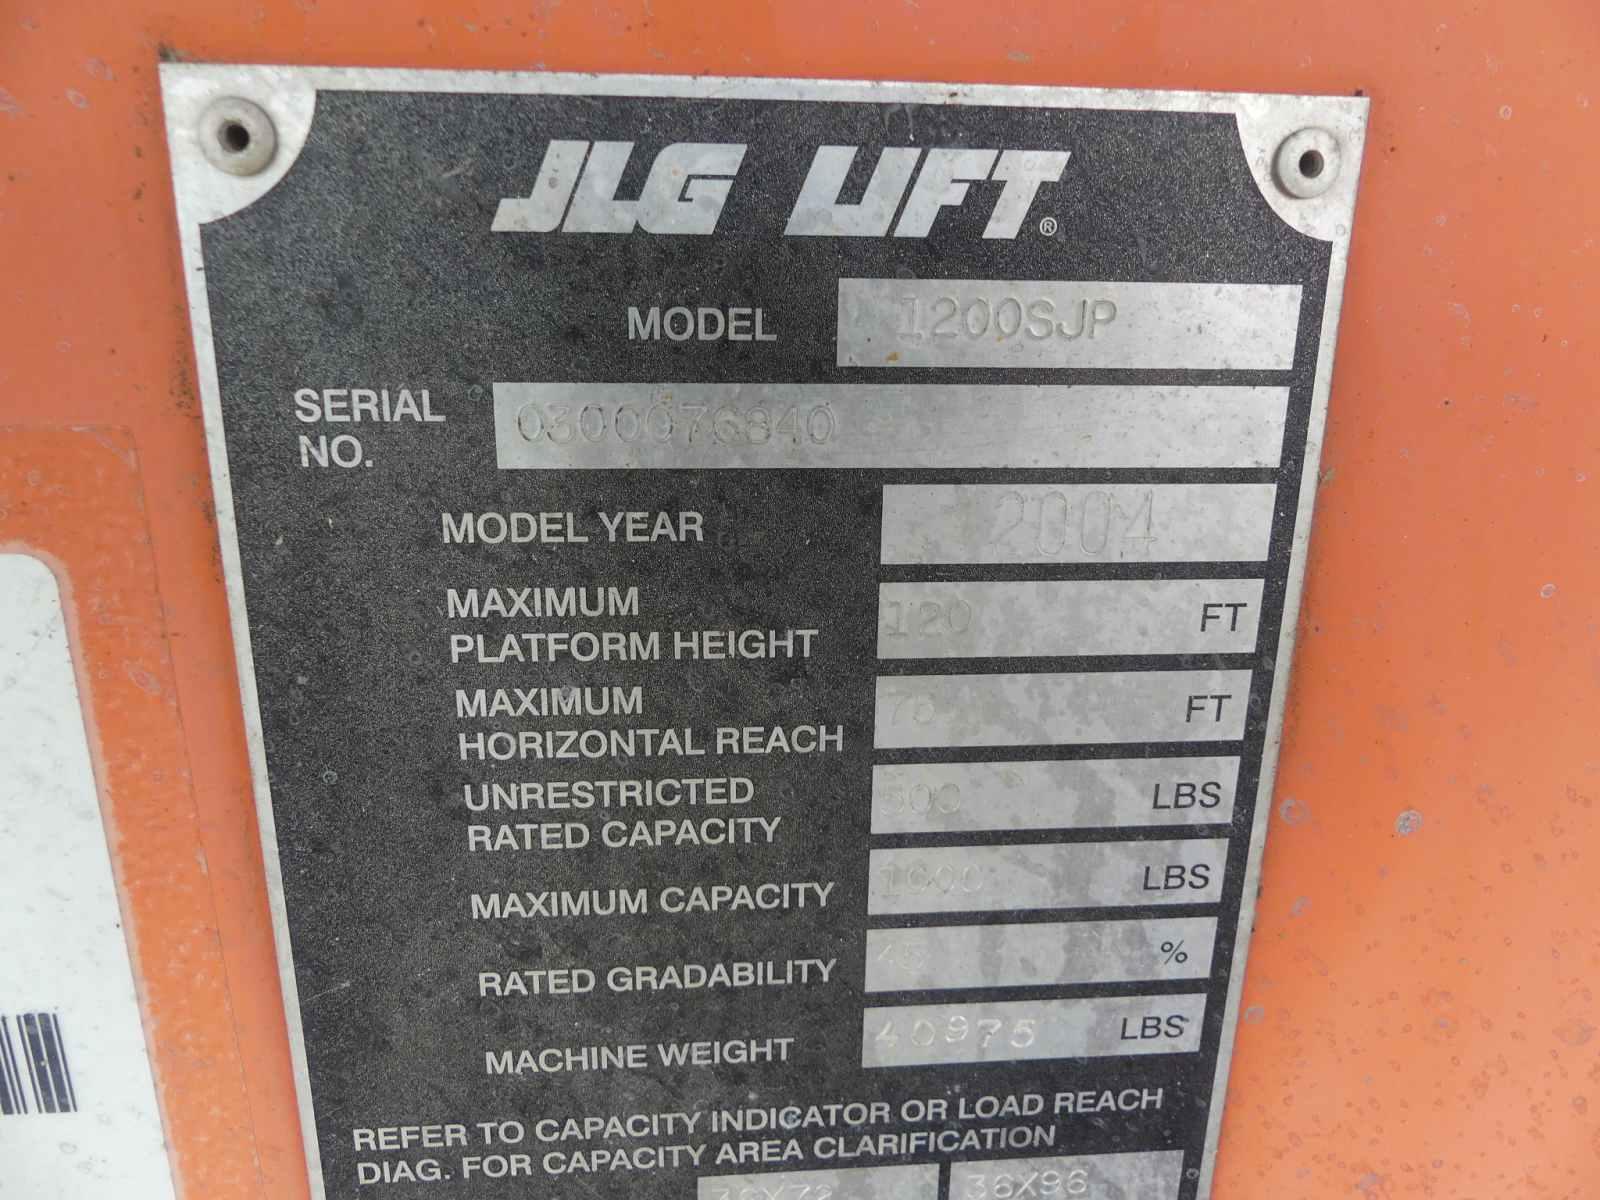 2004 JLG 1200SJP 4WD Boom-type Manlift, s/n 0300076840: 120' Reach, 1000 lb